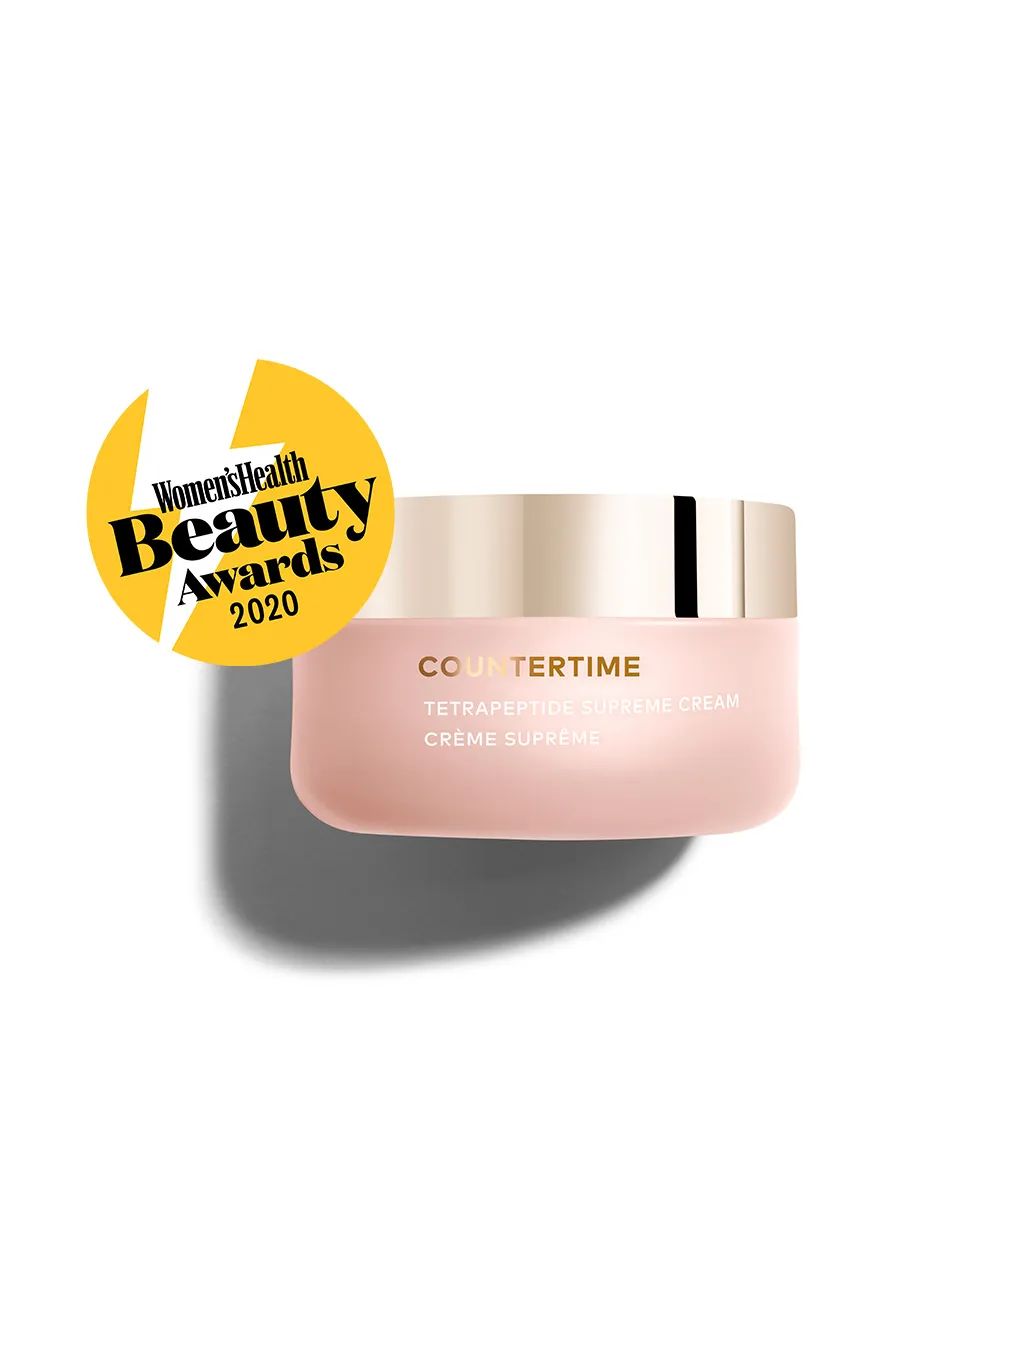 Countertime Tetrapeptide Supreme Cream - Anti-Aging Cream - Beautycounter - Skin Care, Makeup, Ba... | Beautycounter.com